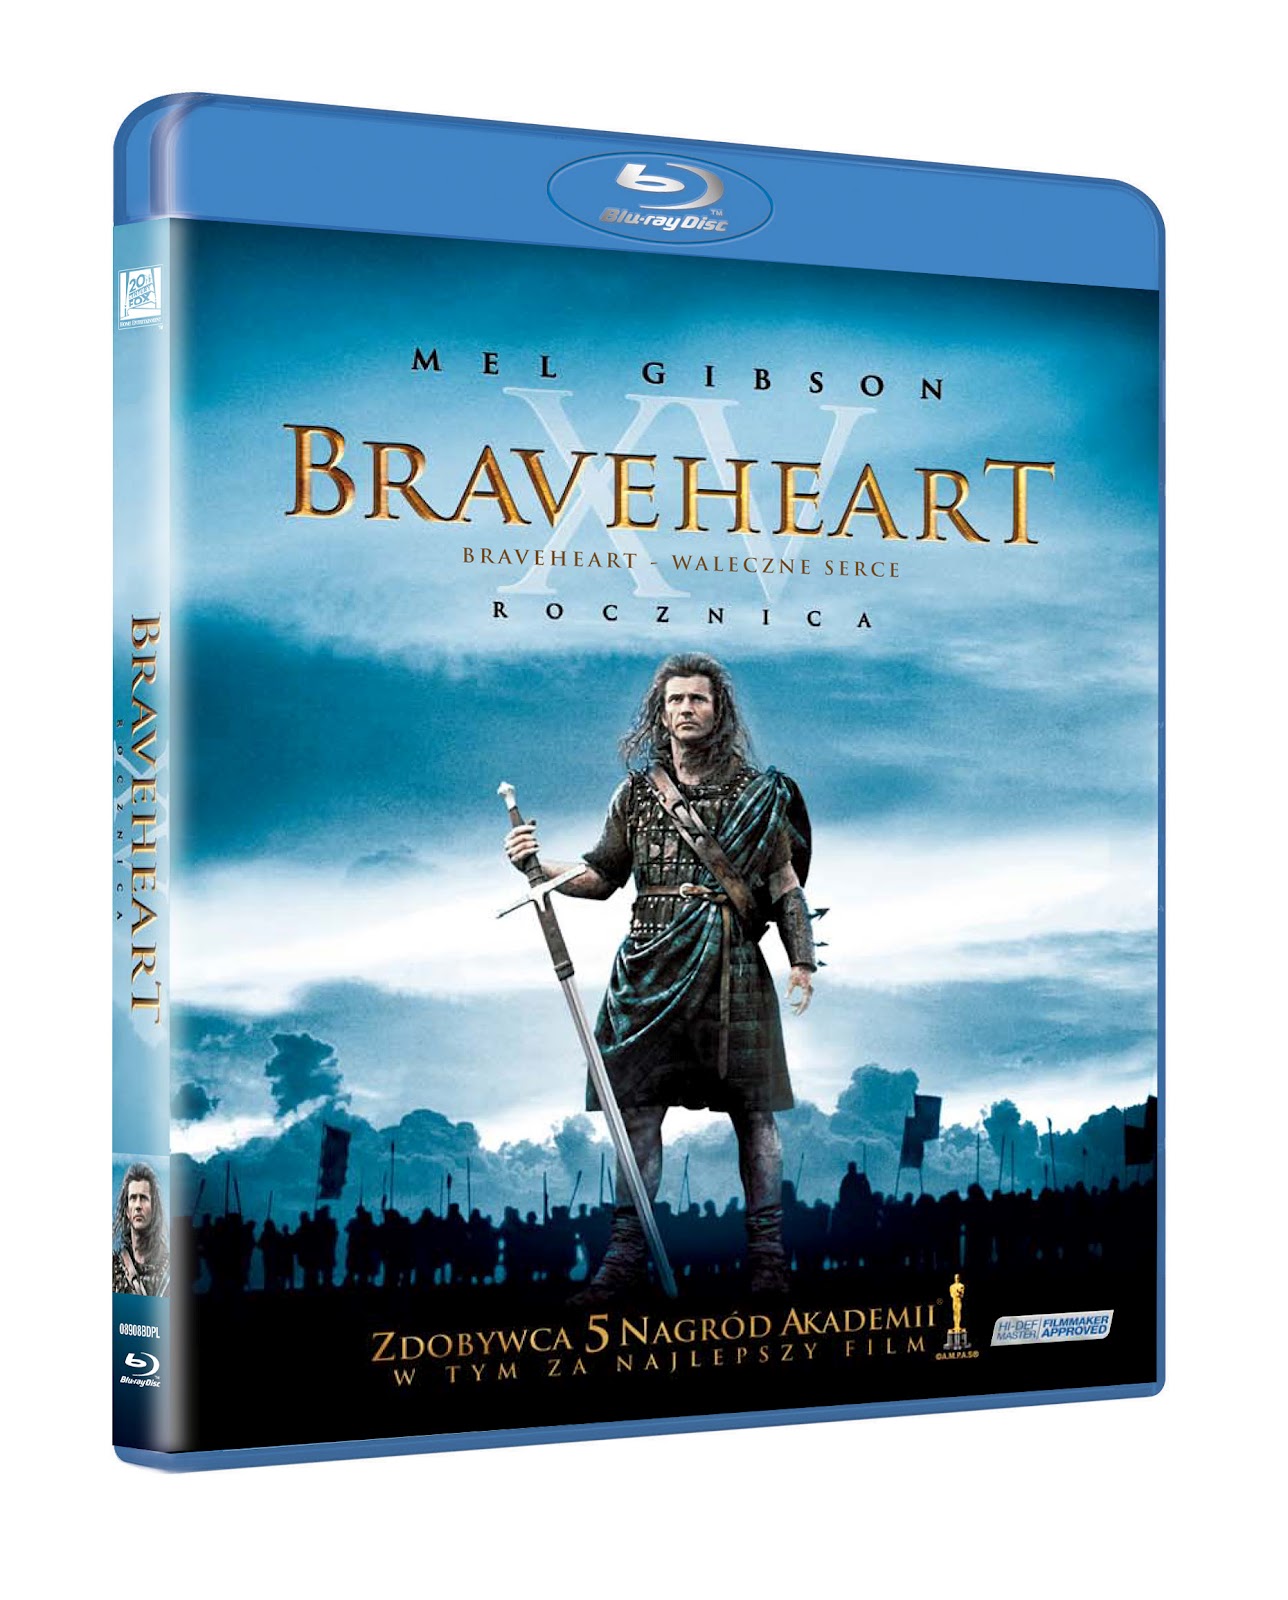 Braveheart Blu-ray Dvd Case